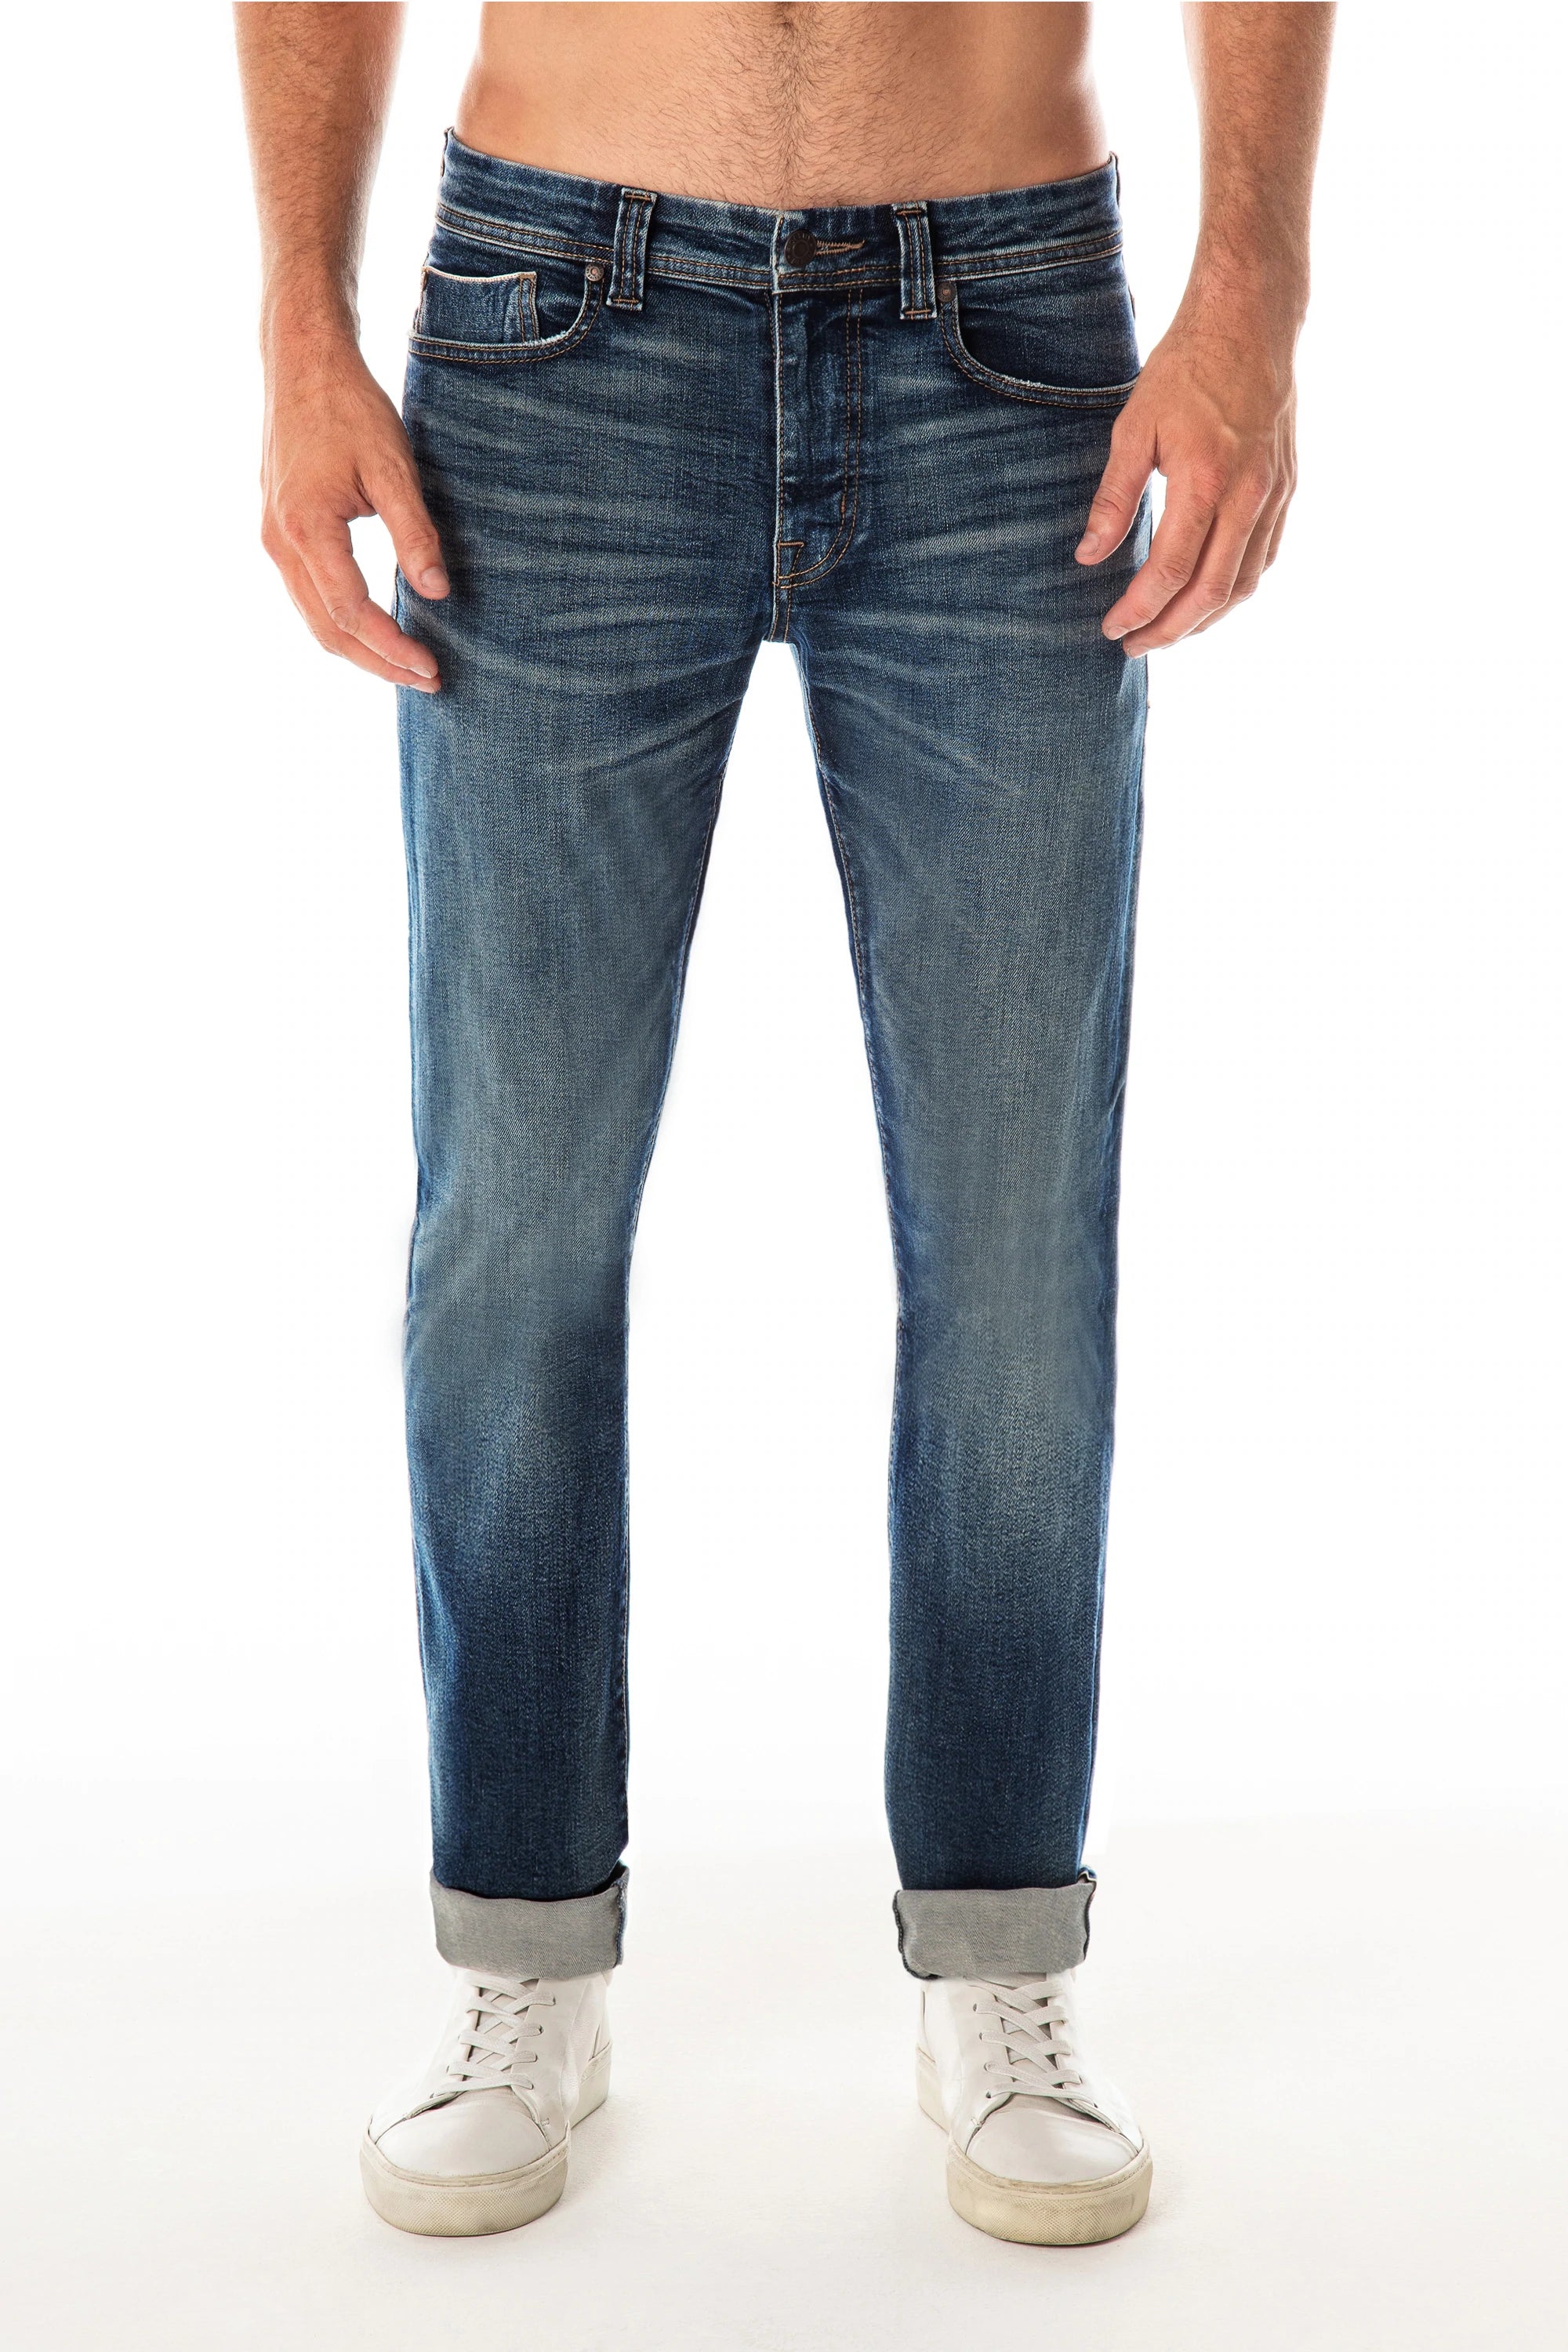 Fidelity Denim Torino Patchouli Selvedge Slim Fit Jeans-Men's Denim-36-Yaletown-Vancouver-Surrey-Canada